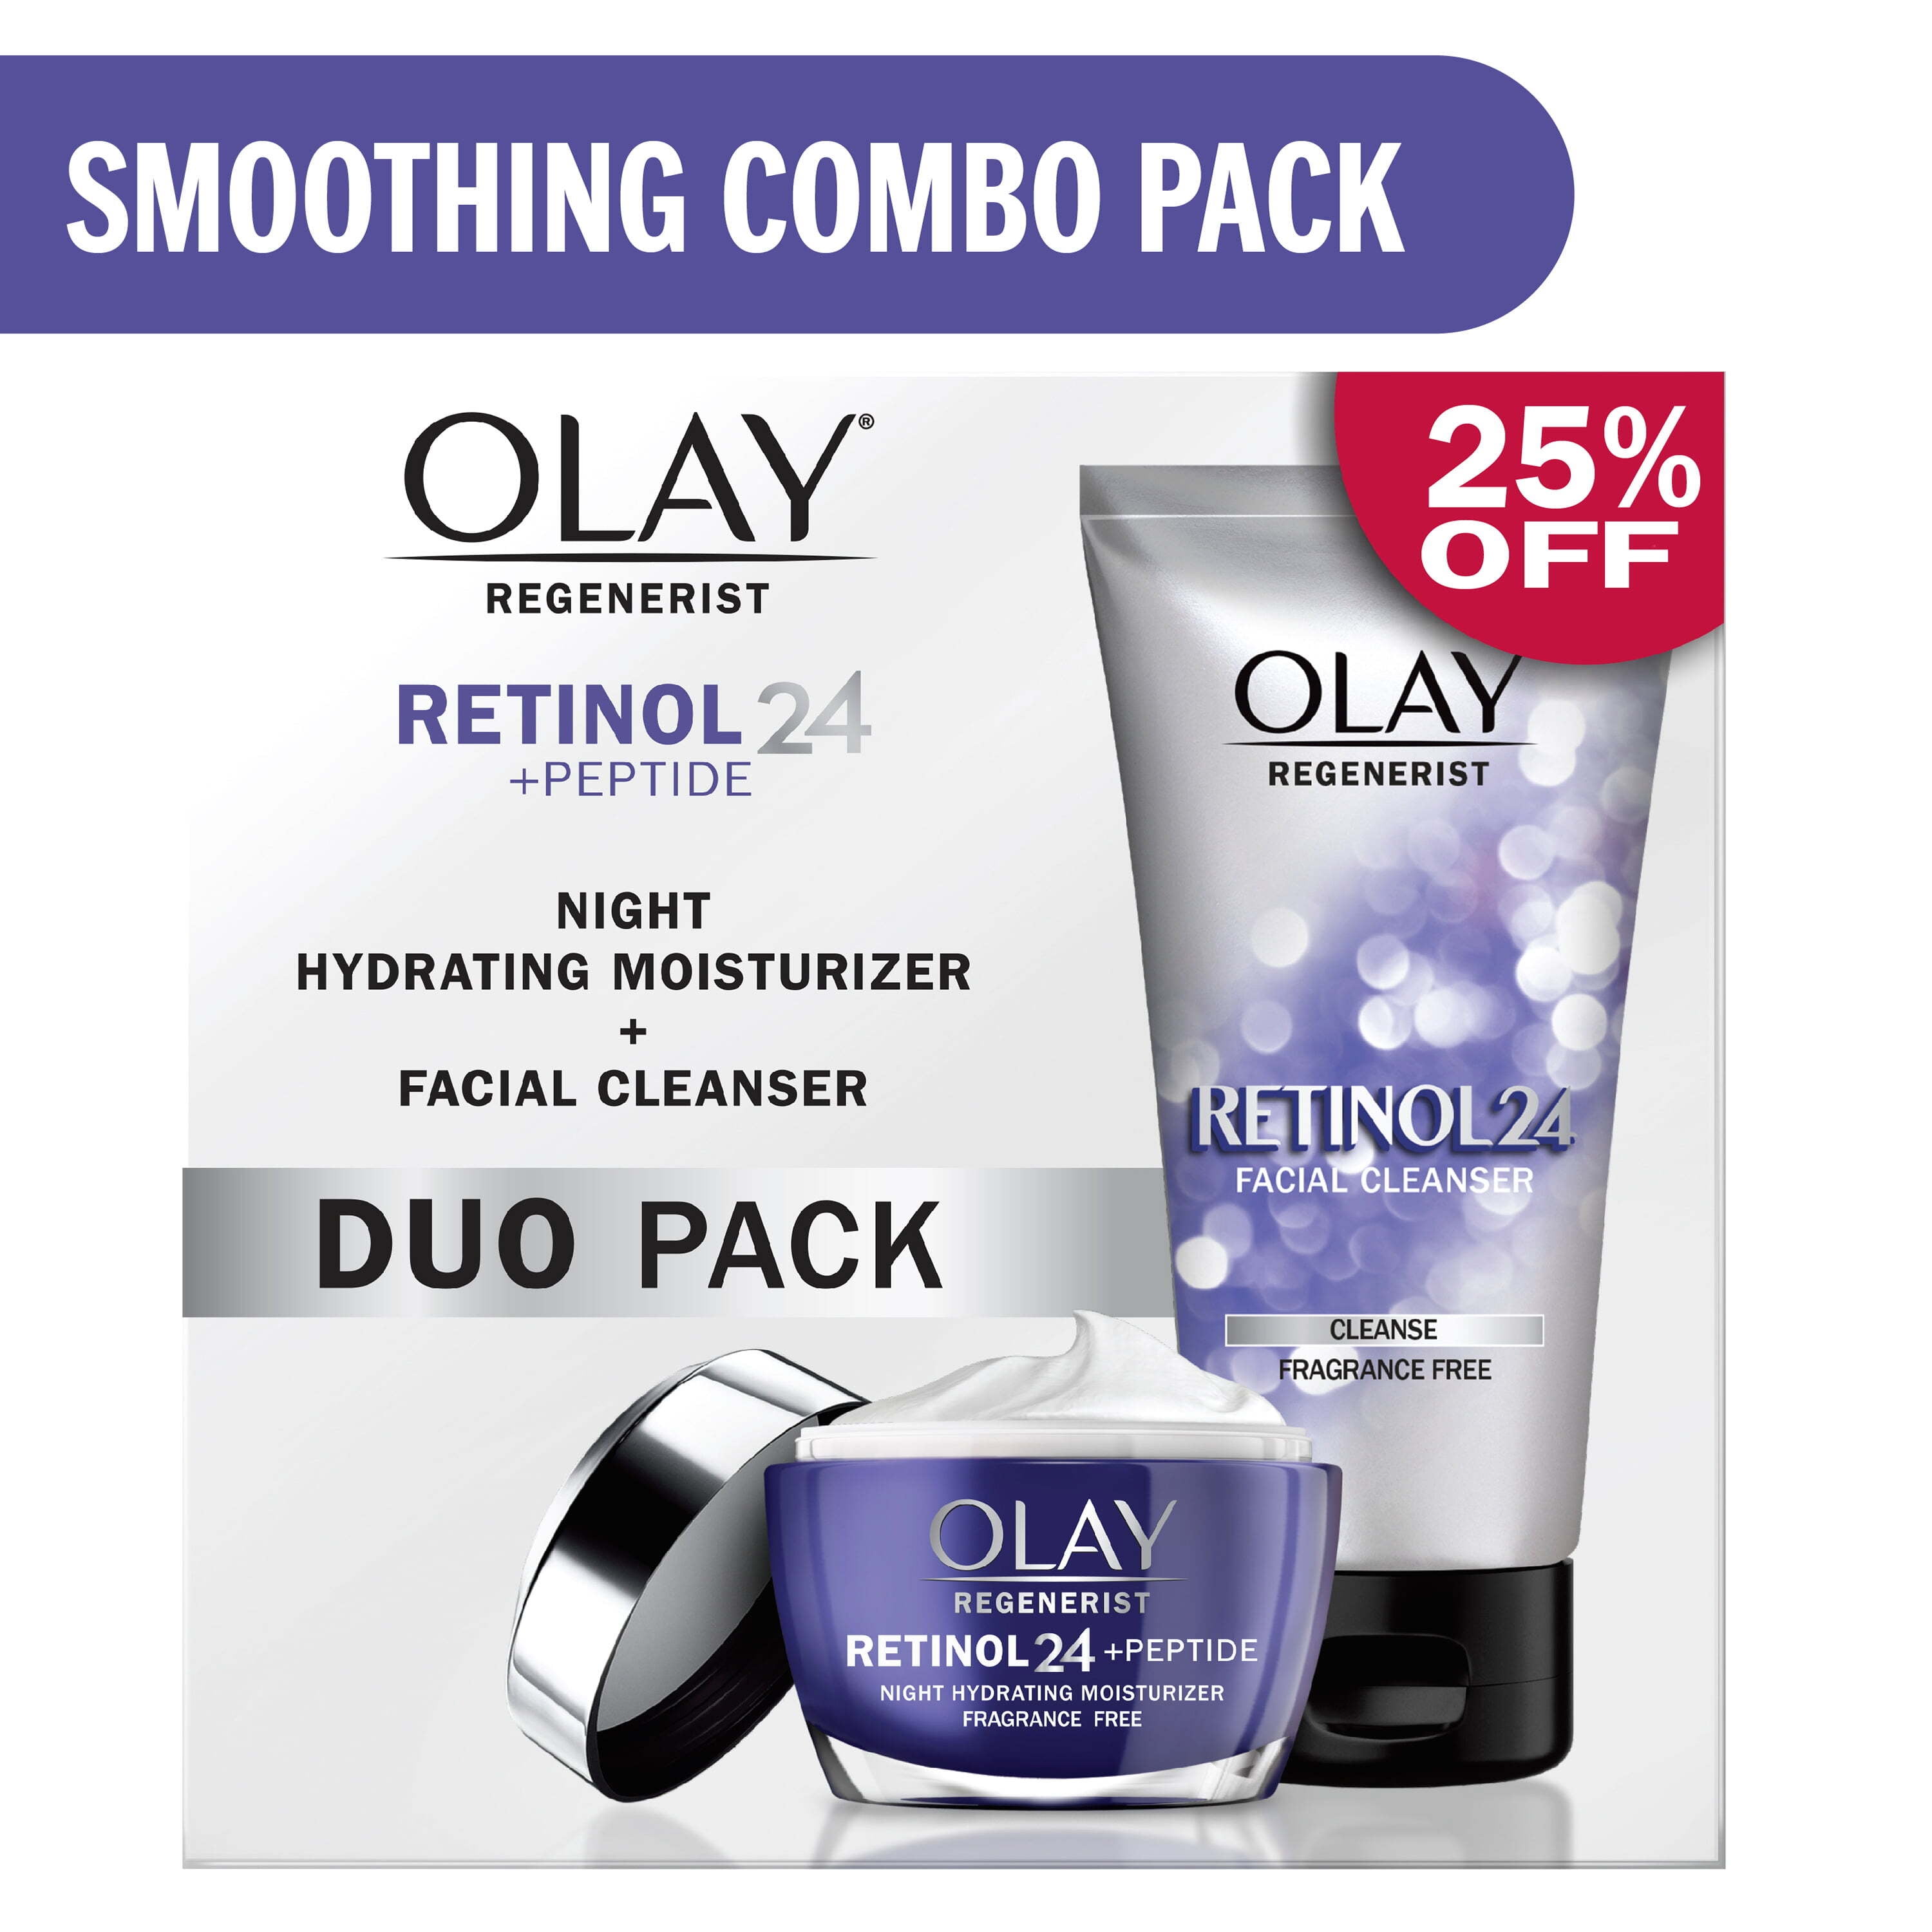 Olay Retinol 24 + Peptide Duo Pack, Smoothing Face Moisturizer & Face Wash, Skin Care Gift Set, 1.7 oz